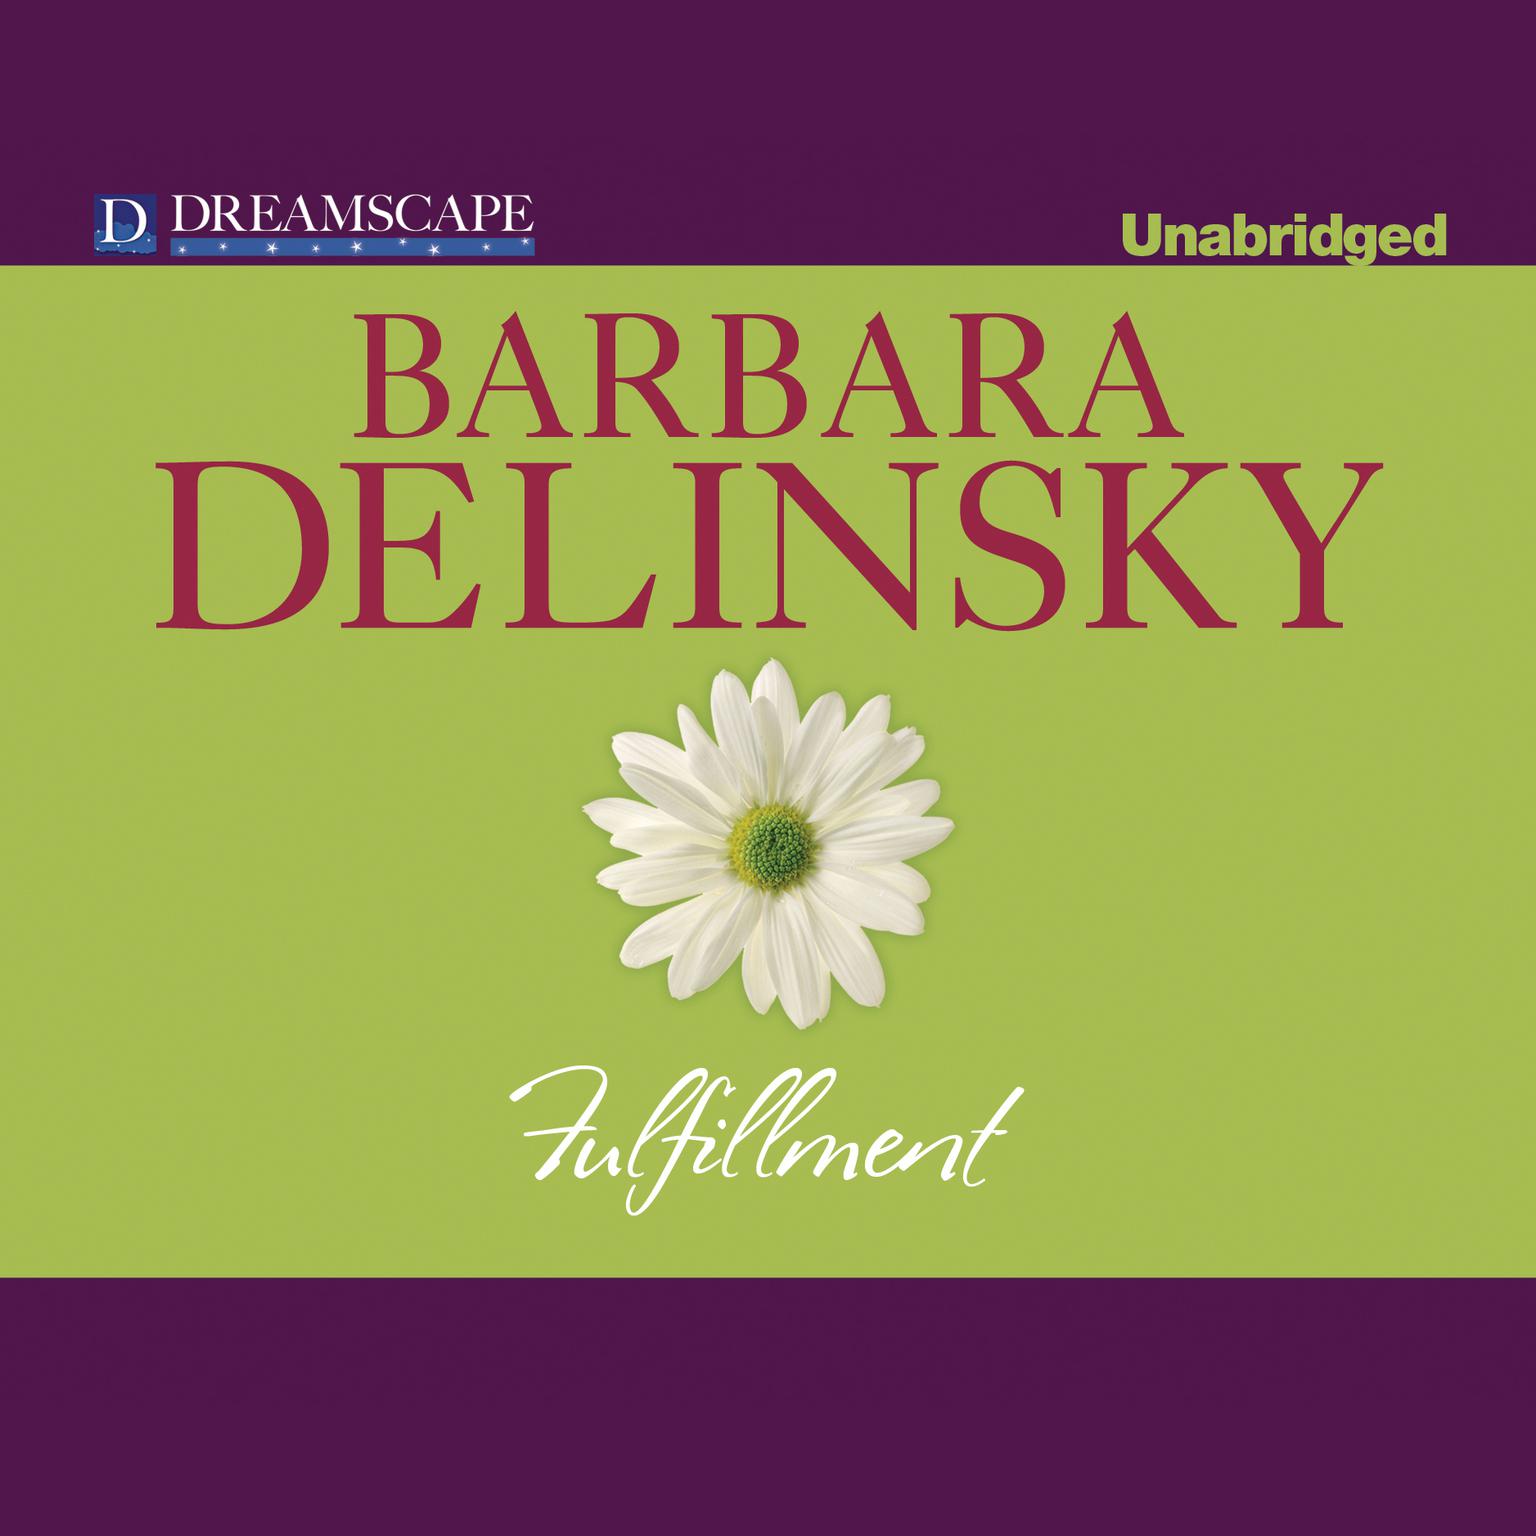 Fulfillment Audiobook, by Barbara Delinsky